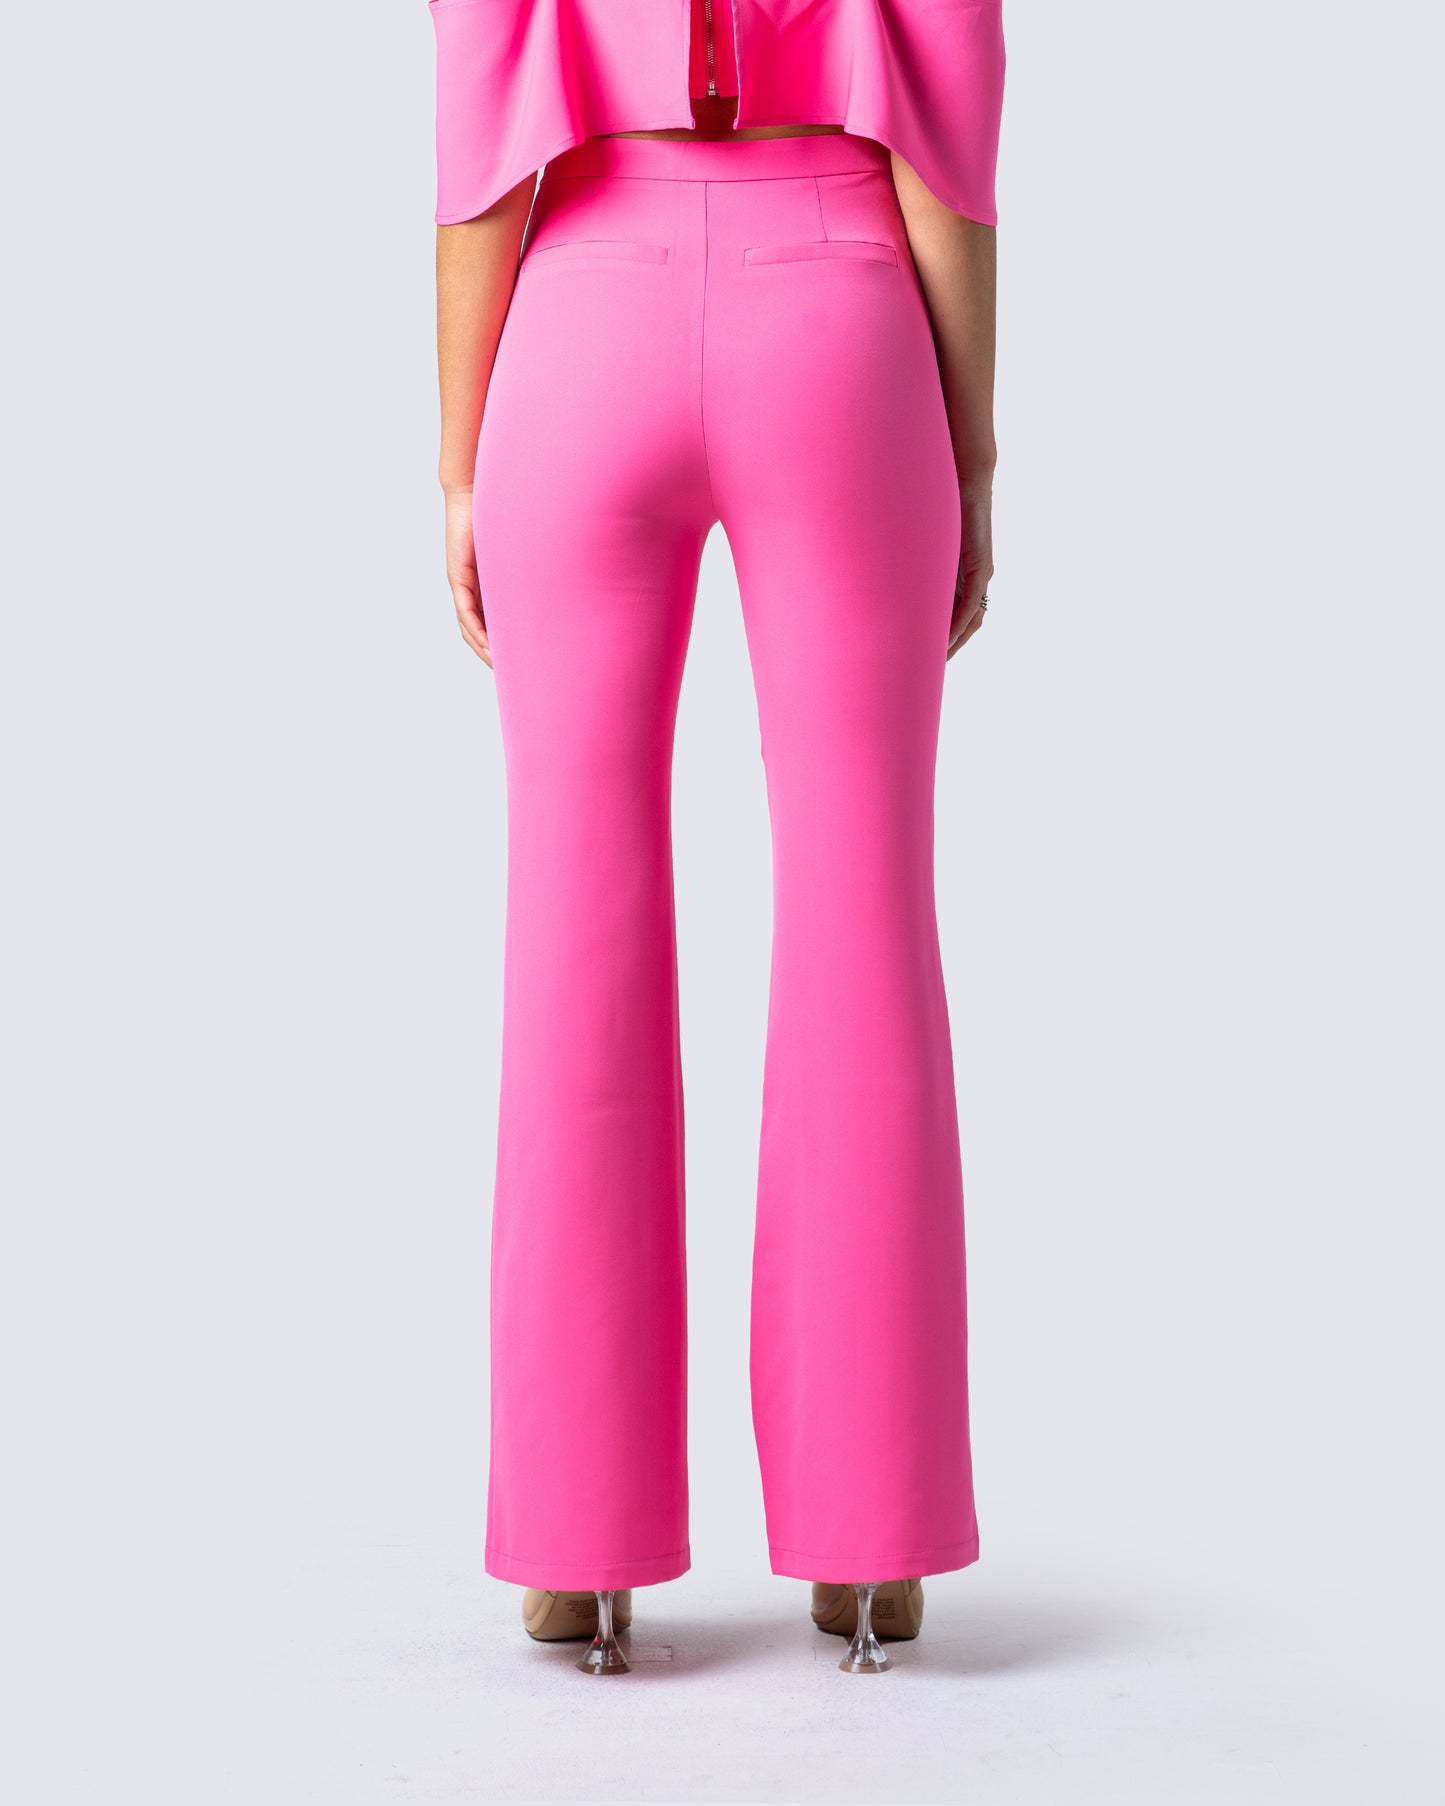 Hot Pink High Waisted Pants